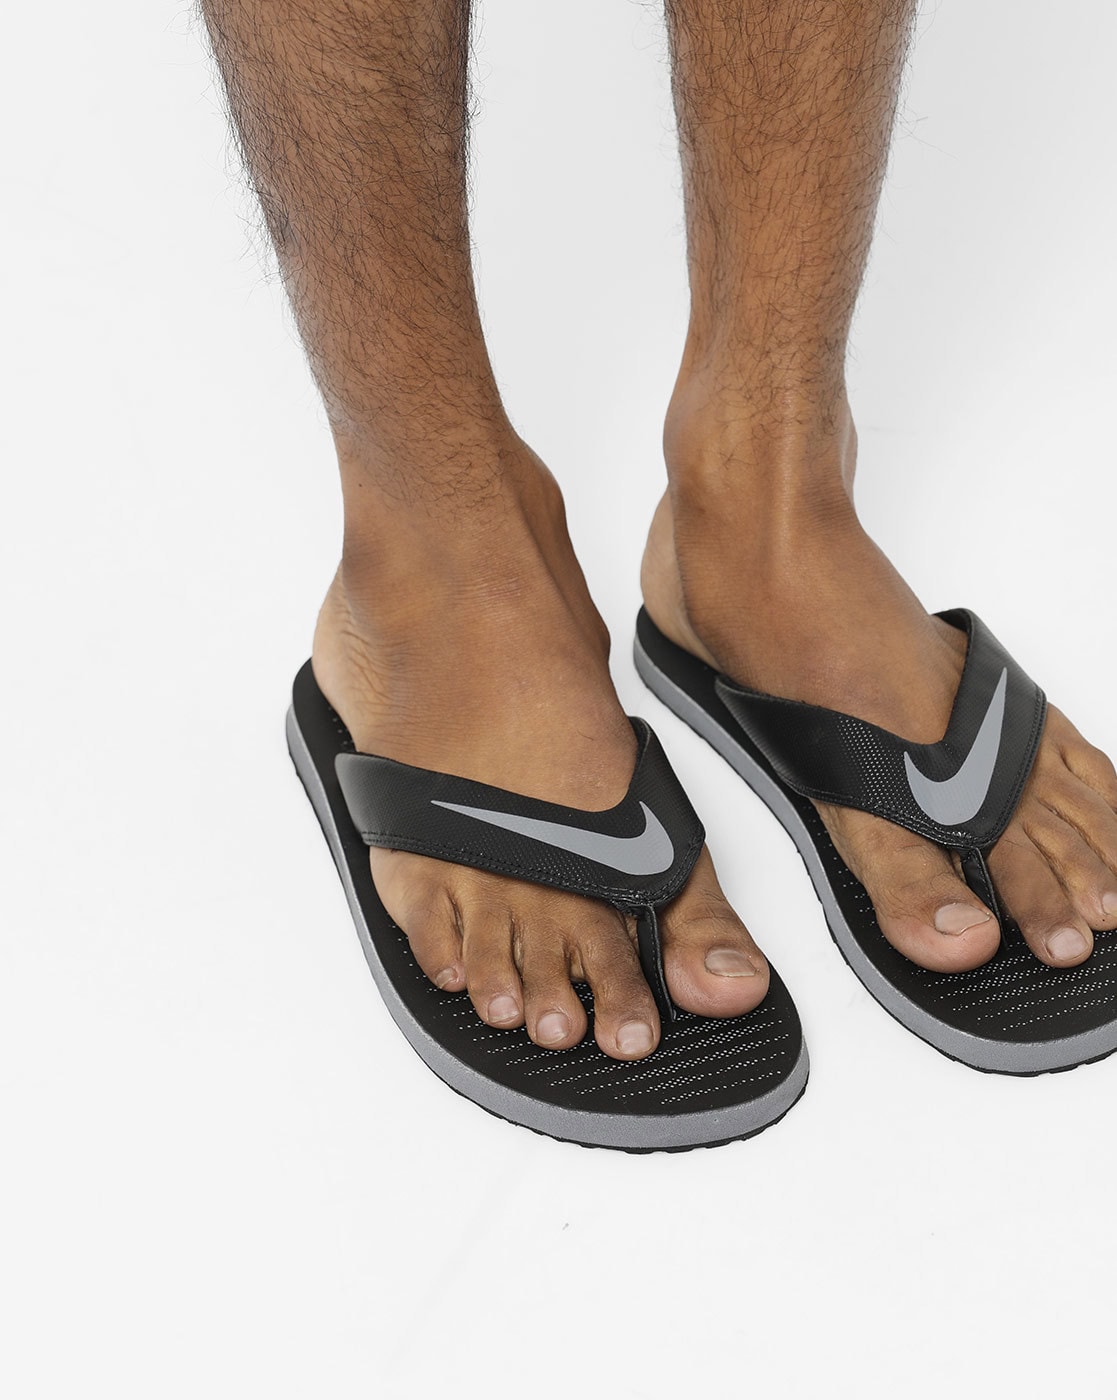 Buy Nike Men's Chroma Thong III Flip Flops Thong Sandals at Amazon.in